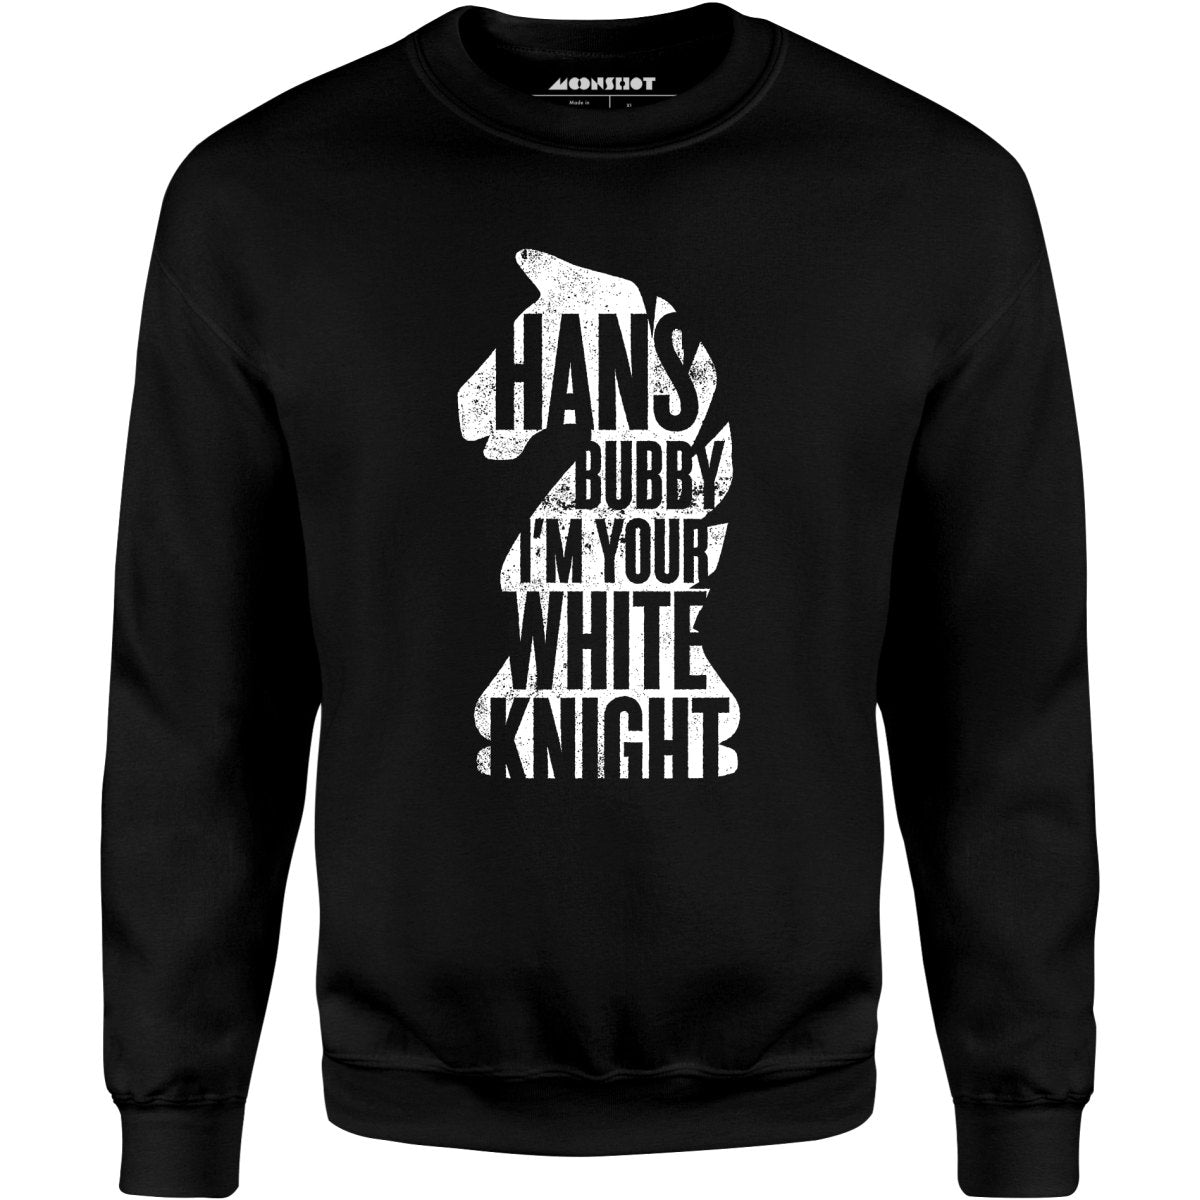 Hans Bubby I'm Your White Knight - Unisex Sweatshirt